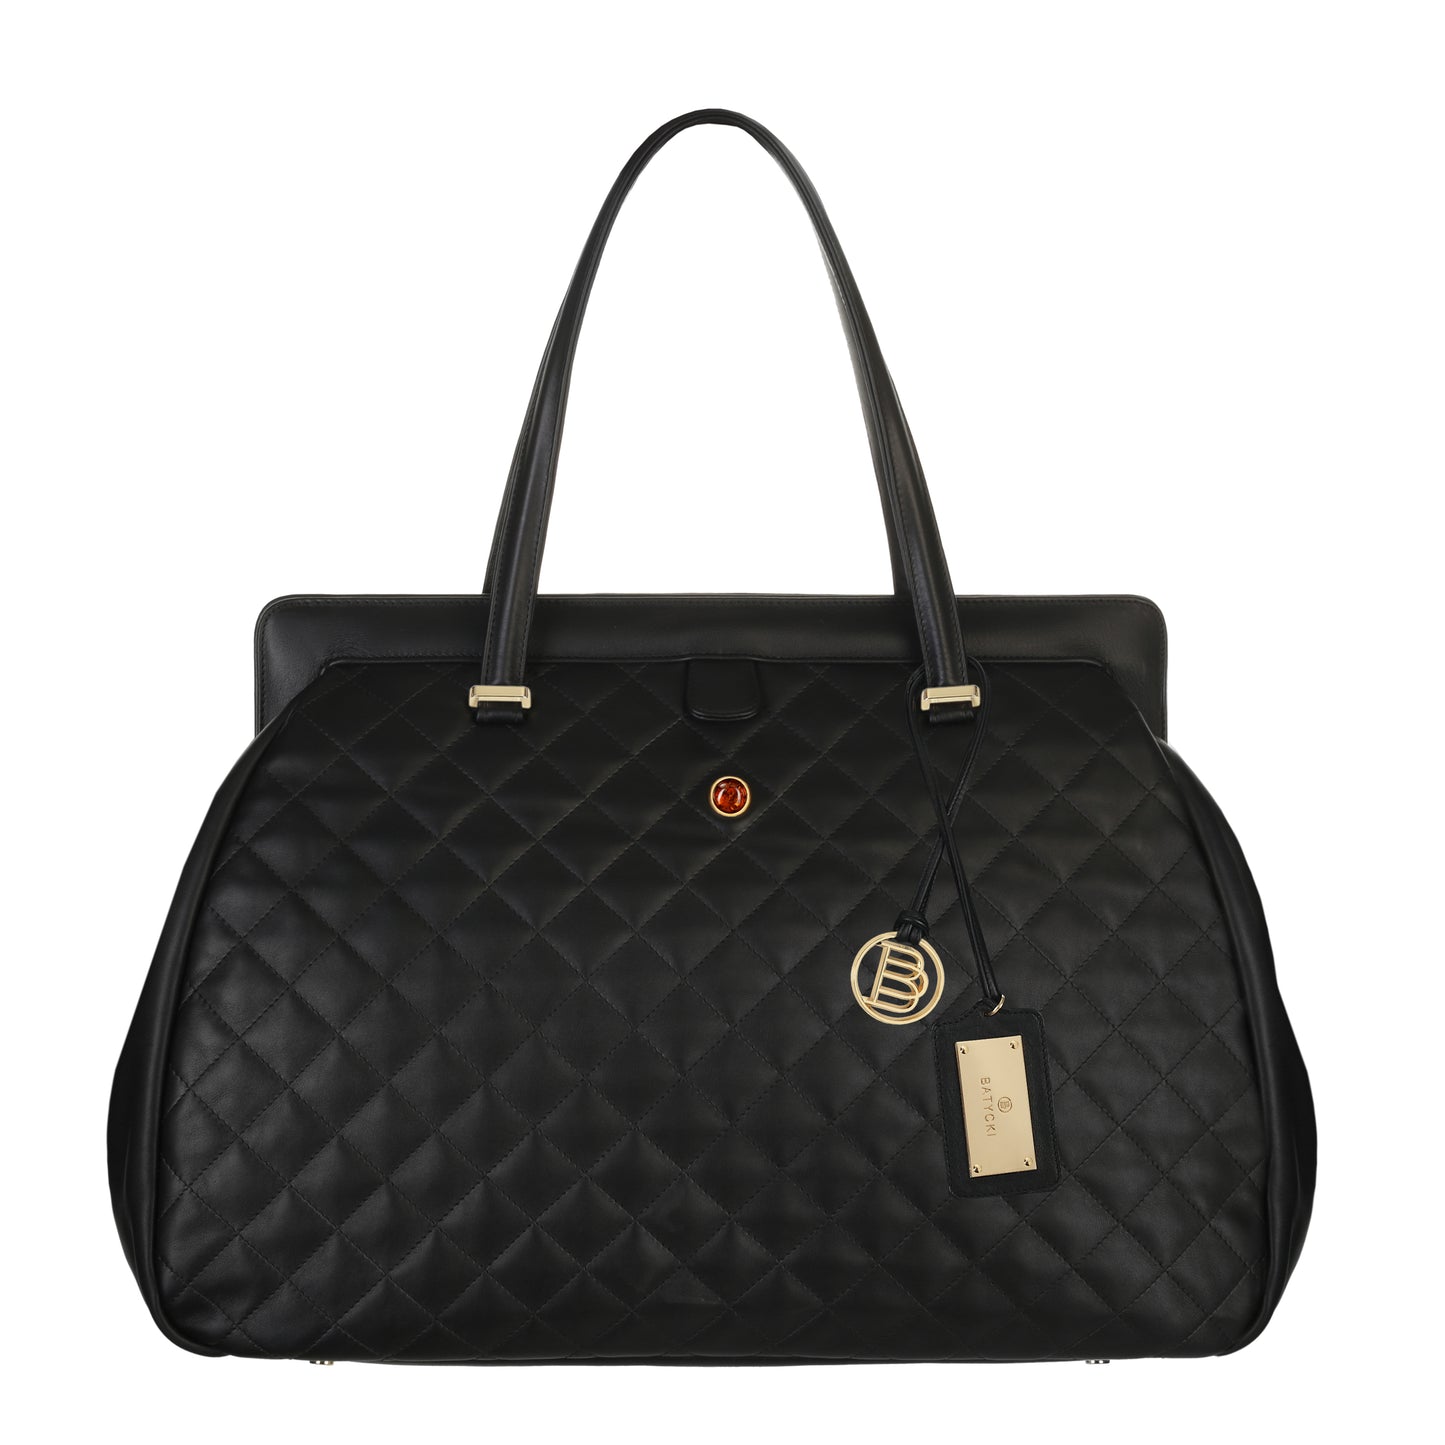 EMMA NAPA BLACK women's leather handbag